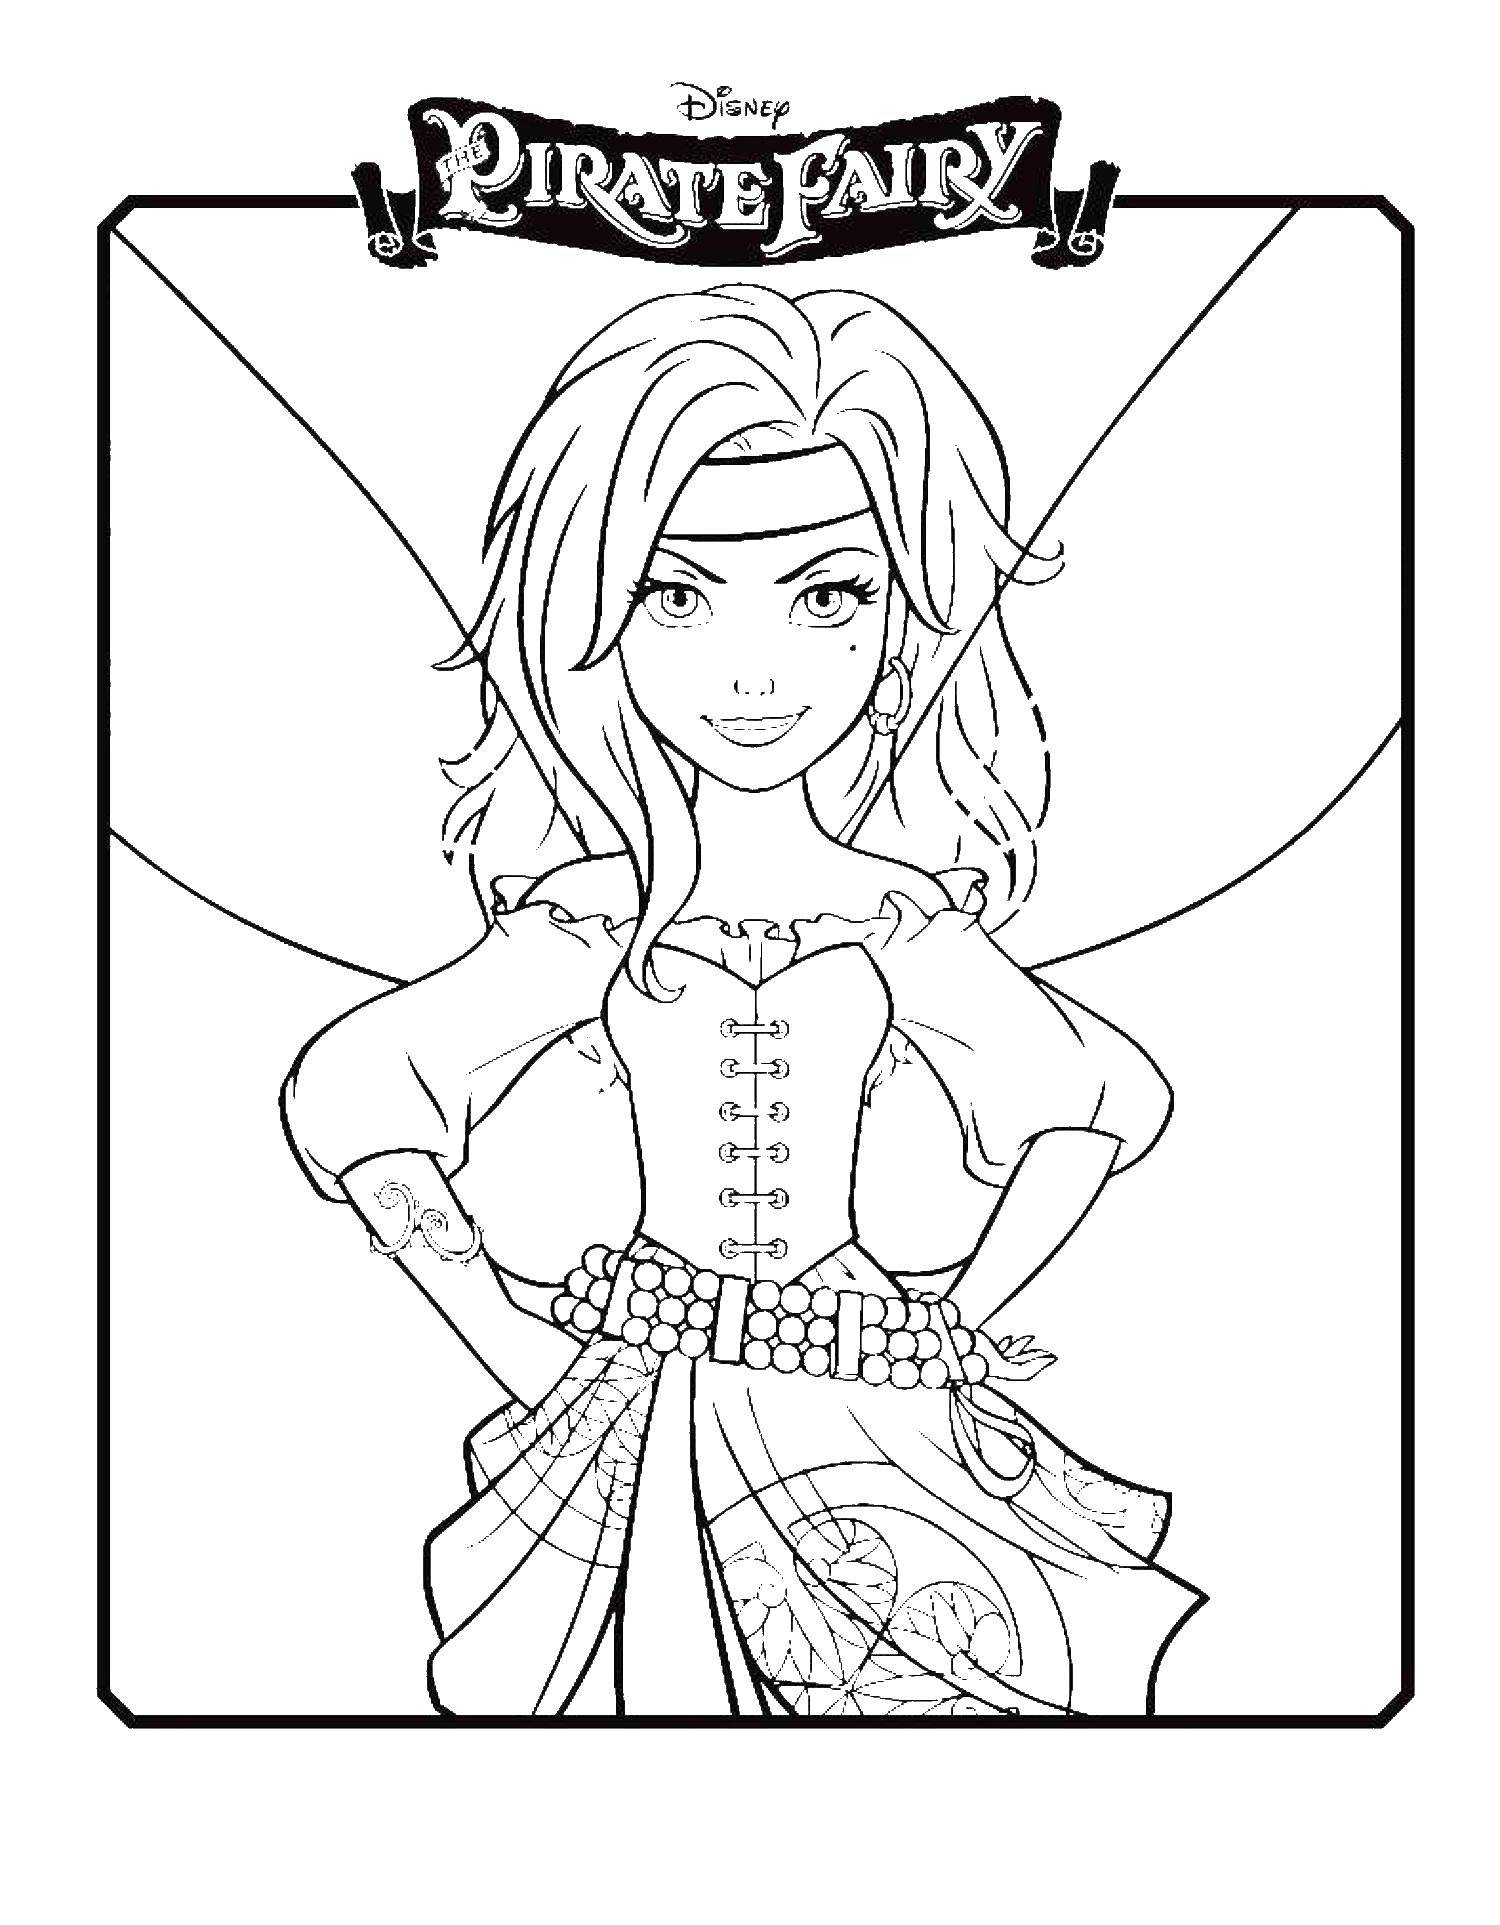 Coloring Zarina the pirate fairy. Category fairies. Tags:  fairies, Zarina.